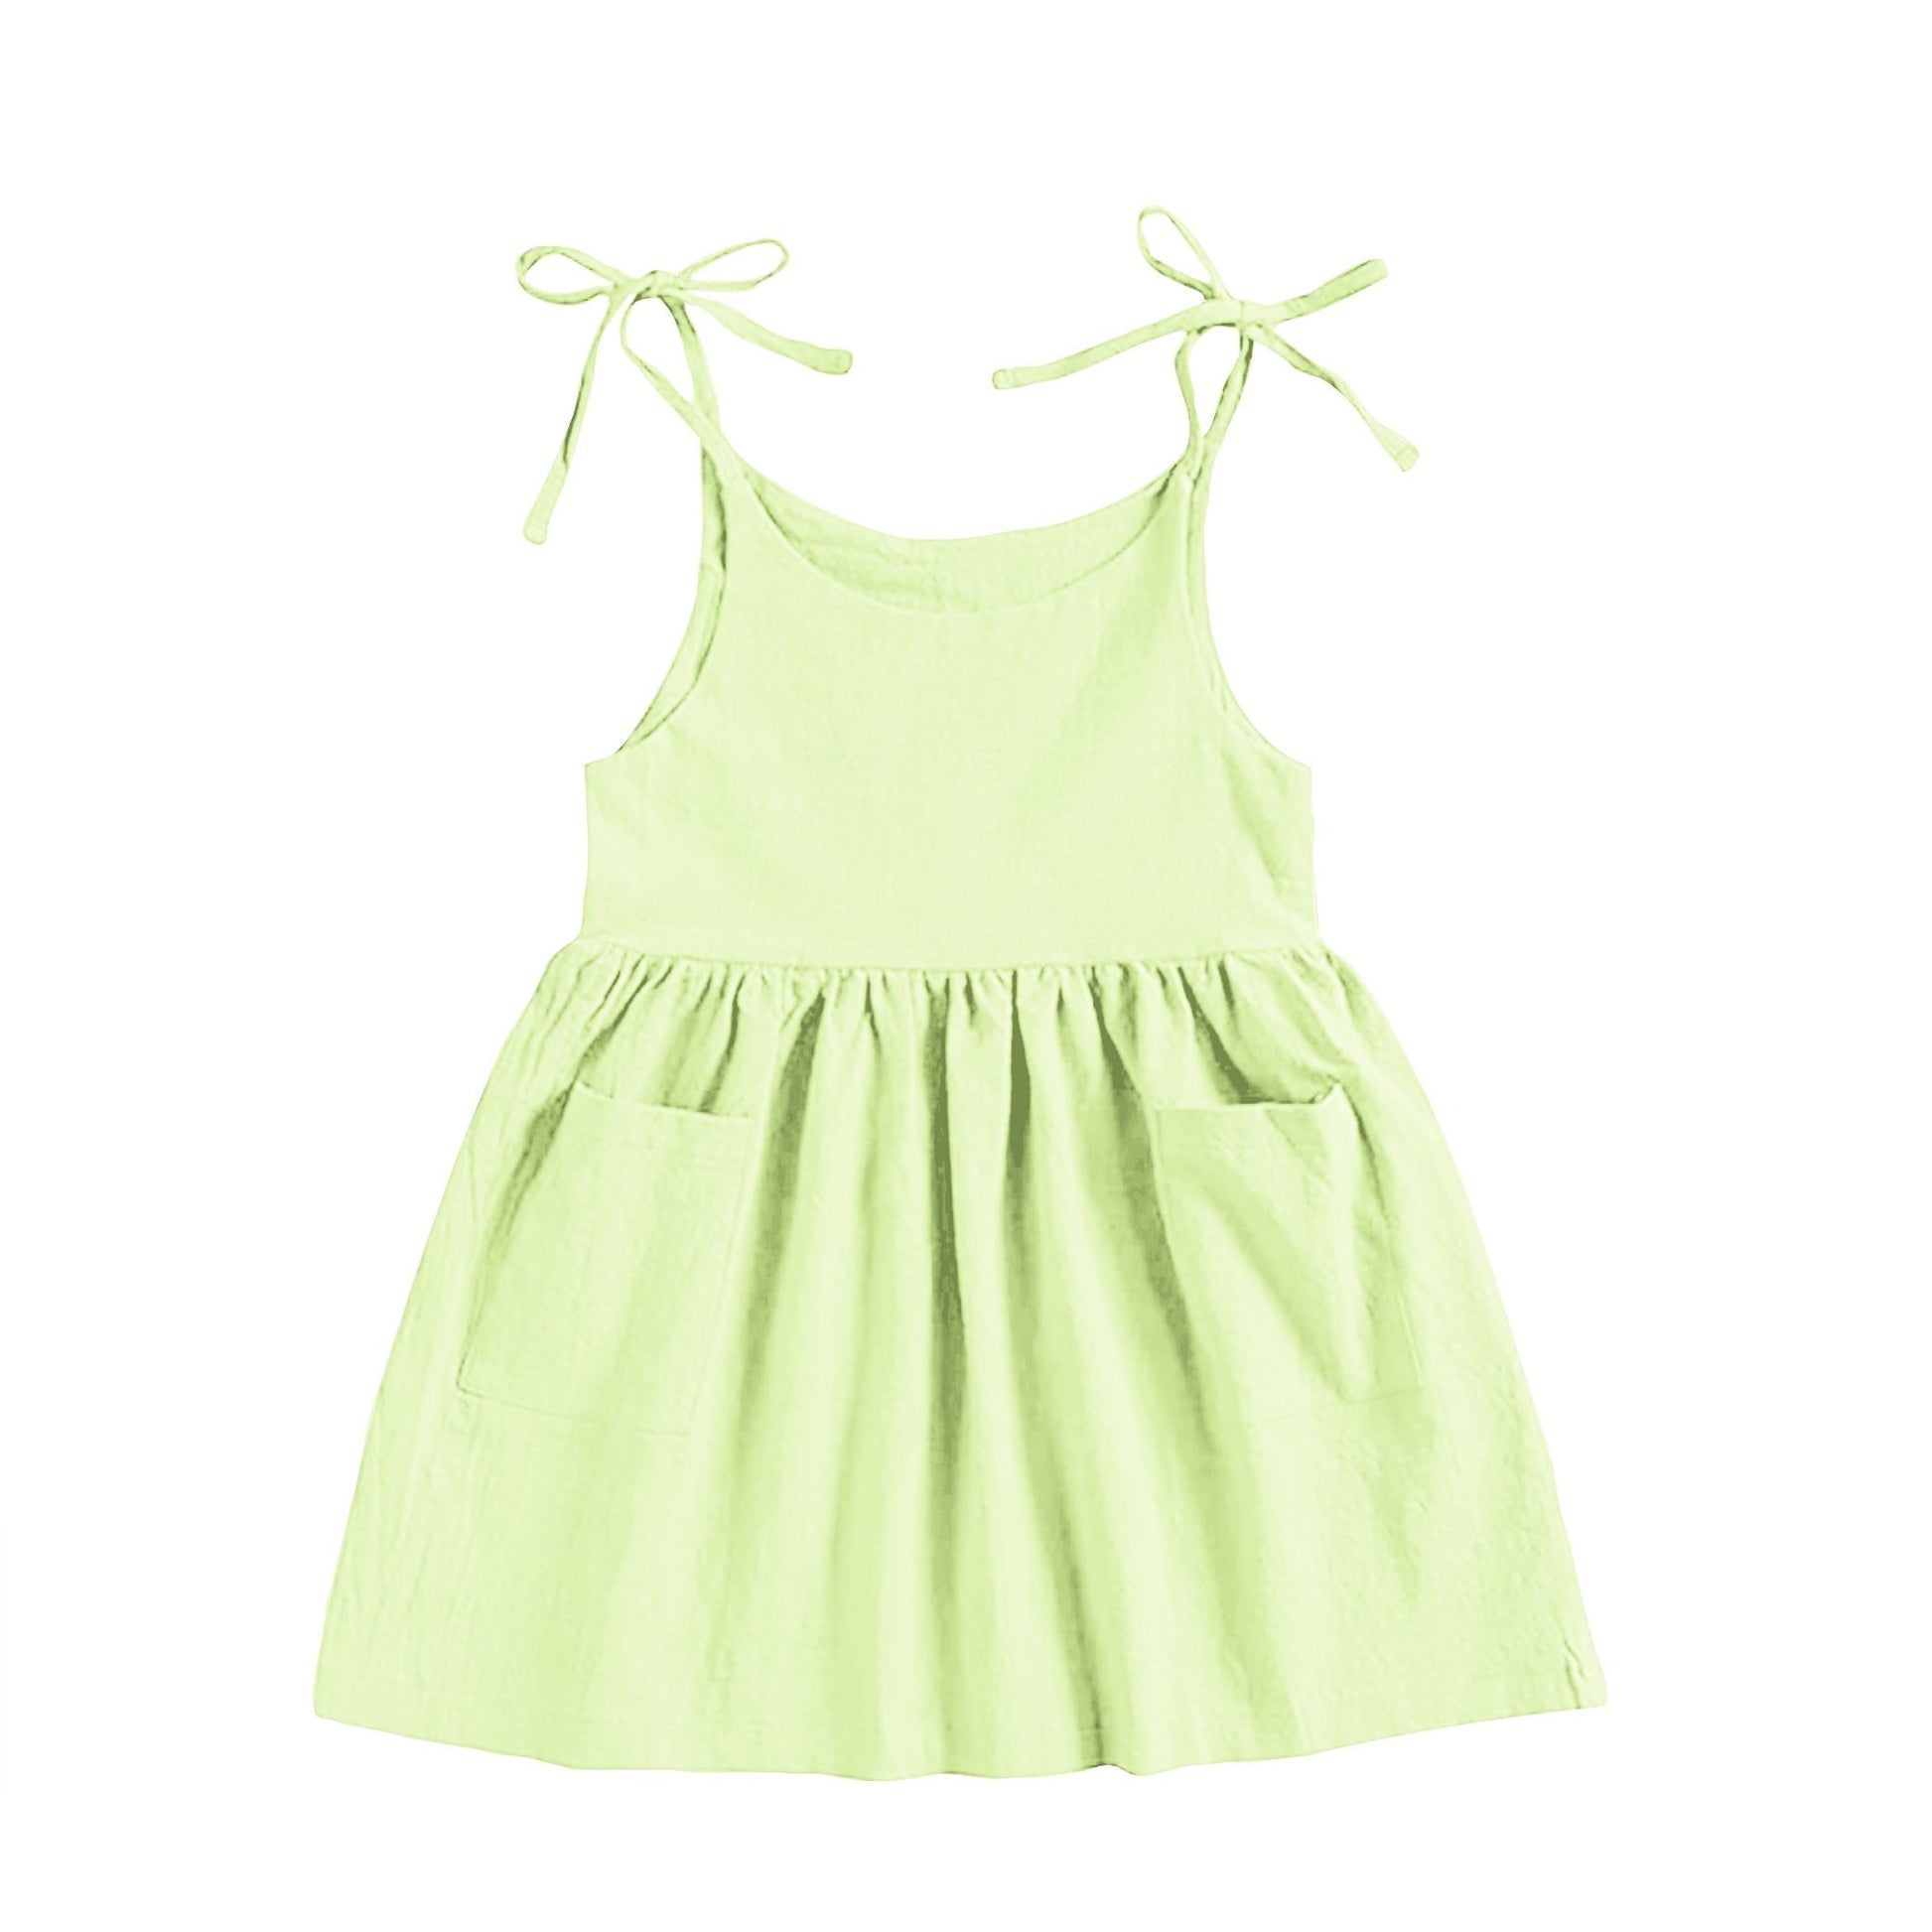 'Lime Green' Organic Sleeveless Nightdress